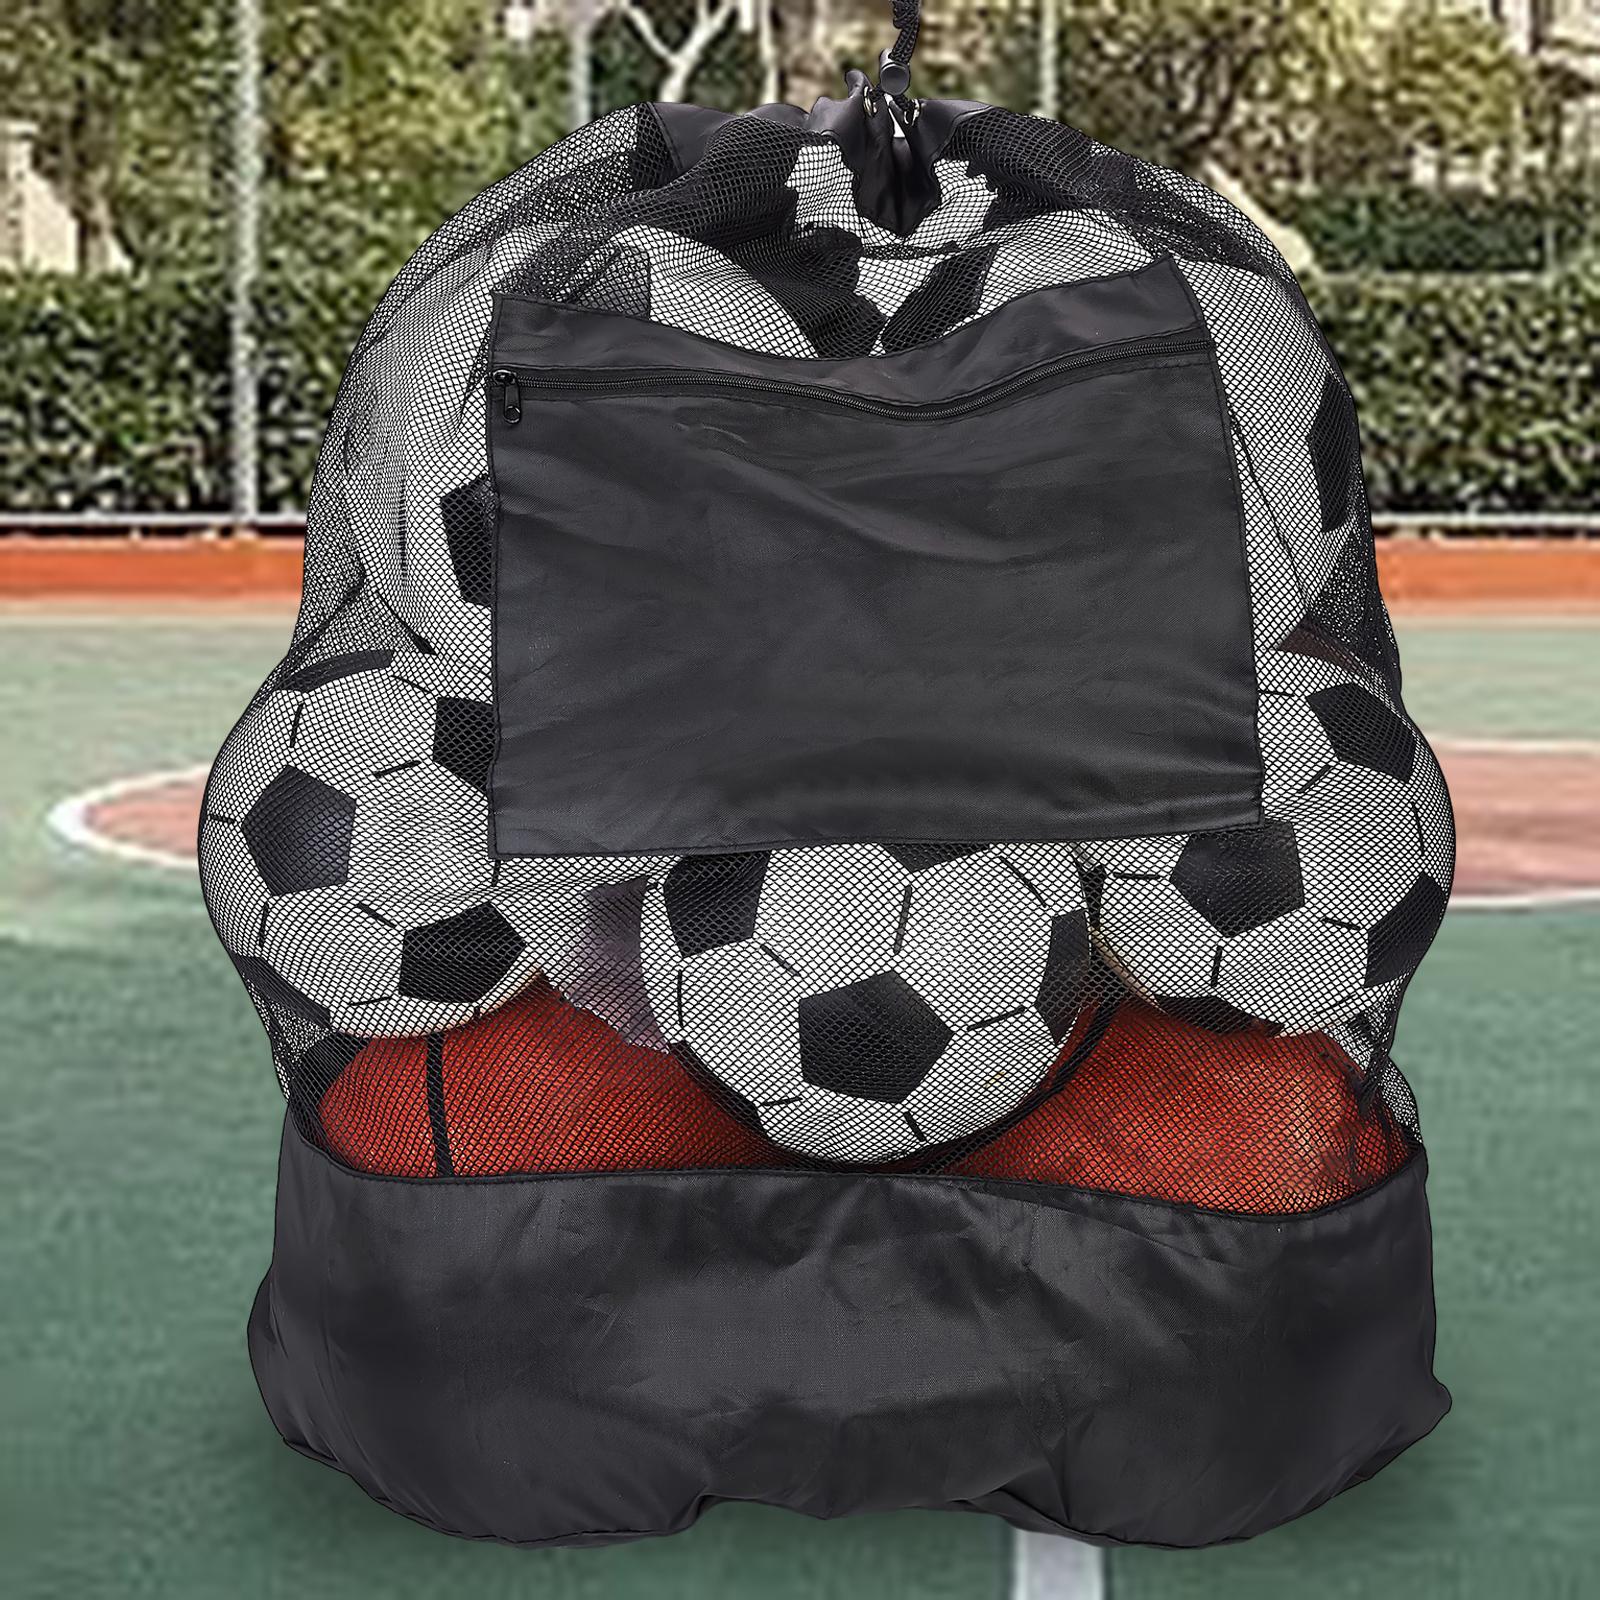 WBMOON Soccer Mesh Ball Bag Carrying Bag Drawstring Bags Outdoor